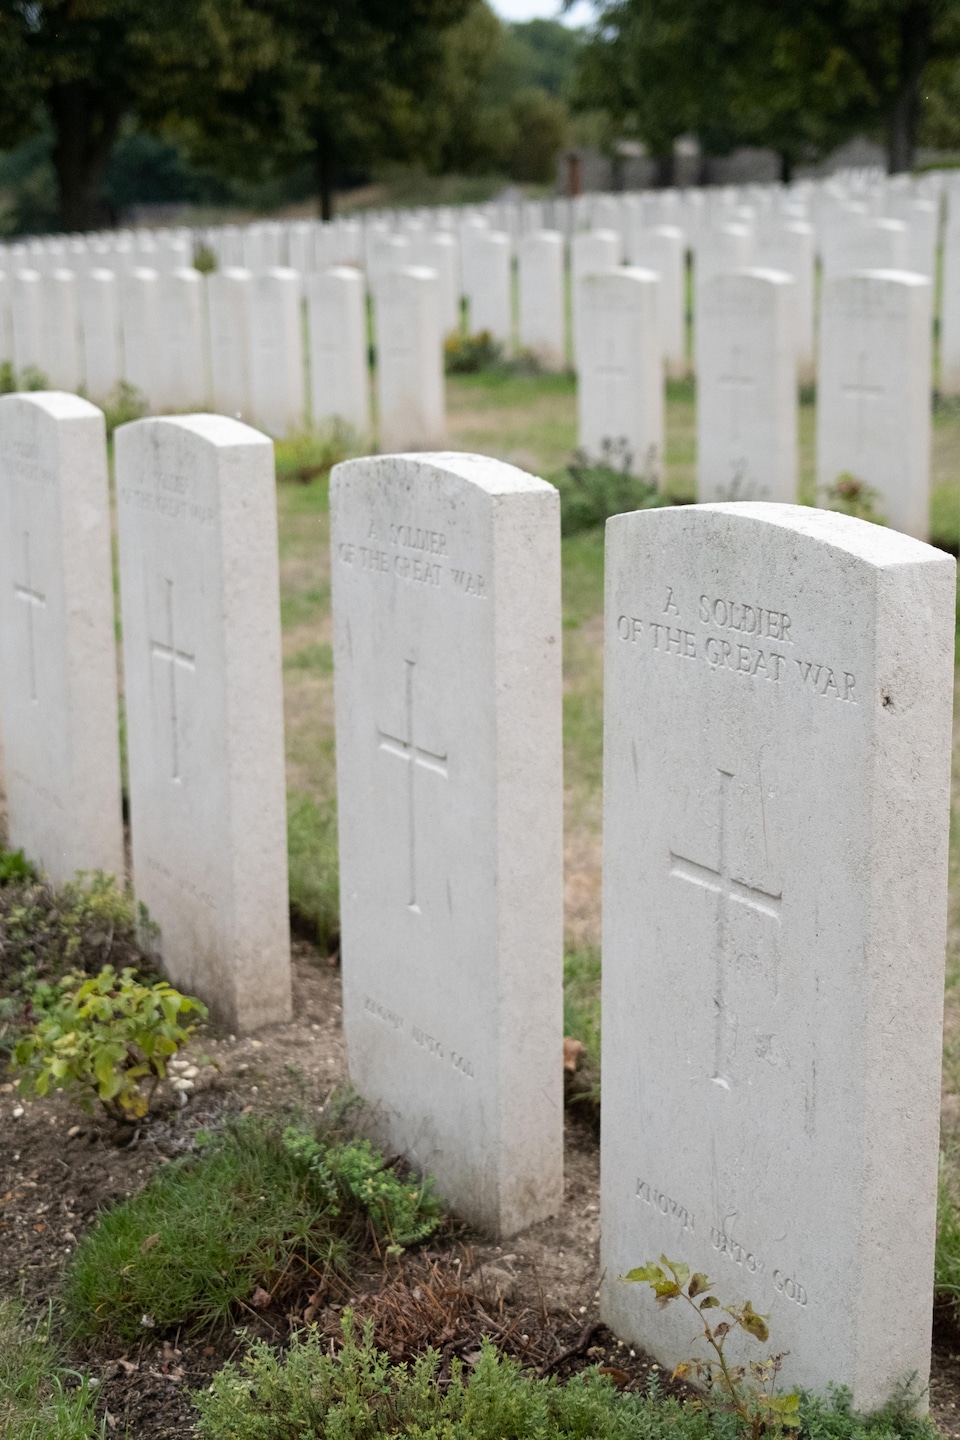 Sur les tombes, on peut lire le texte « A soldier of the great war».